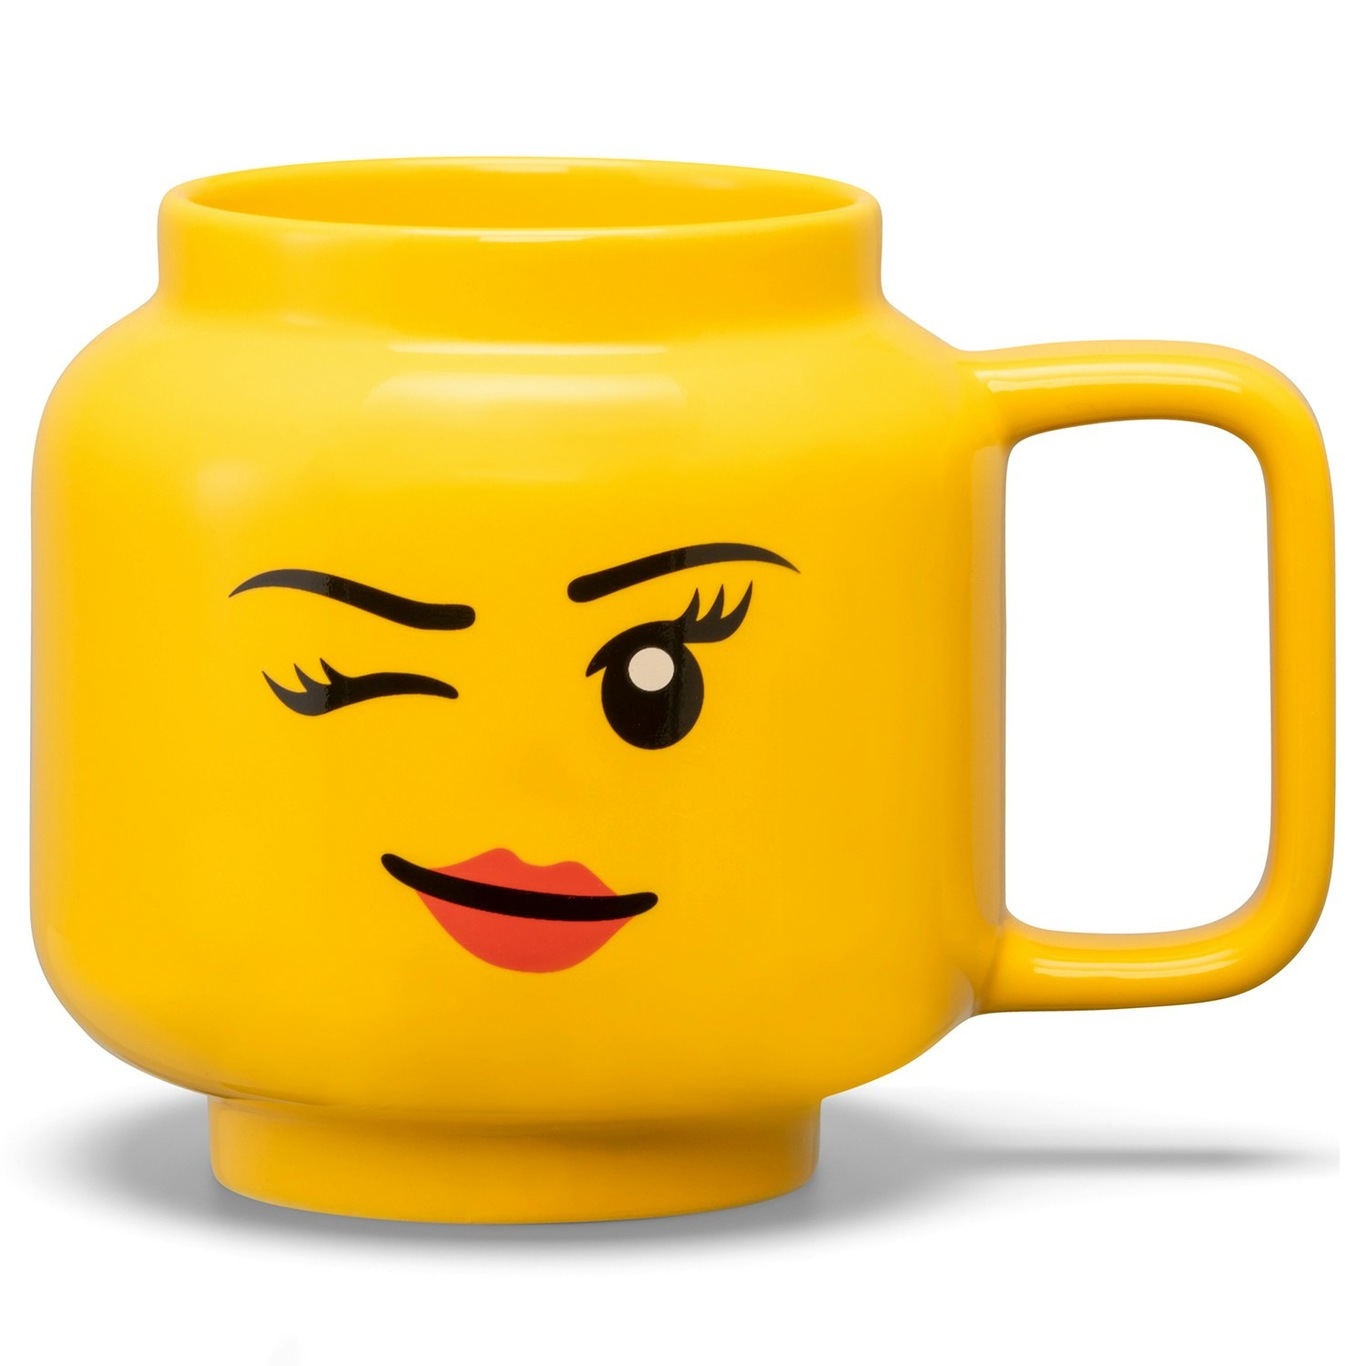 LEGO Ceramic Mug Small Boy Muki Keltainen, L